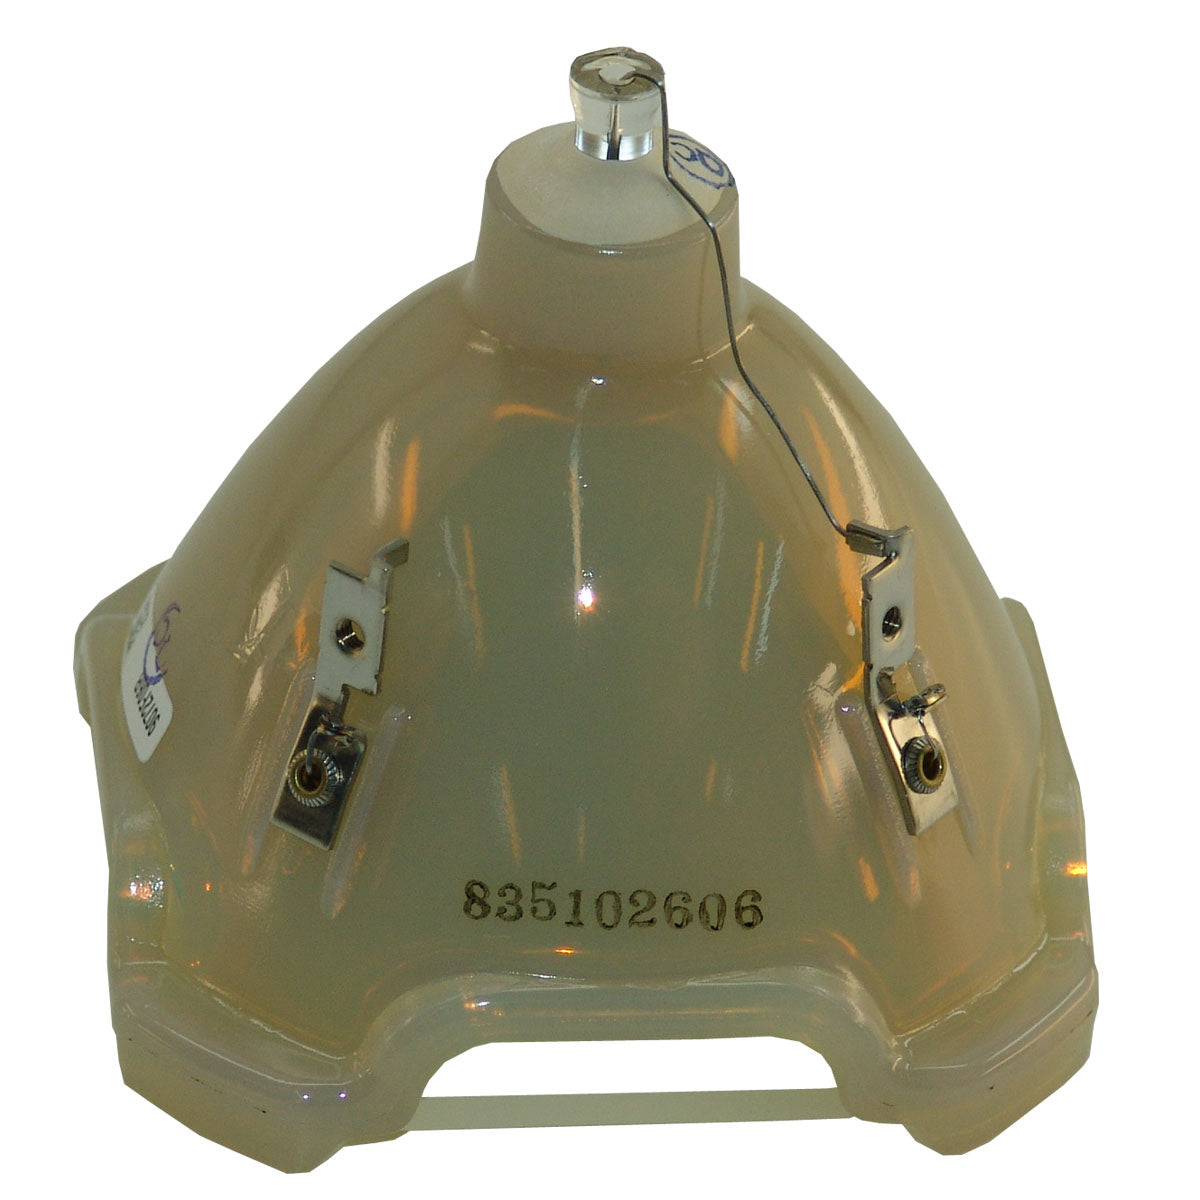 Sanyo POA-LMP101 Osram Projector Bare Lamp